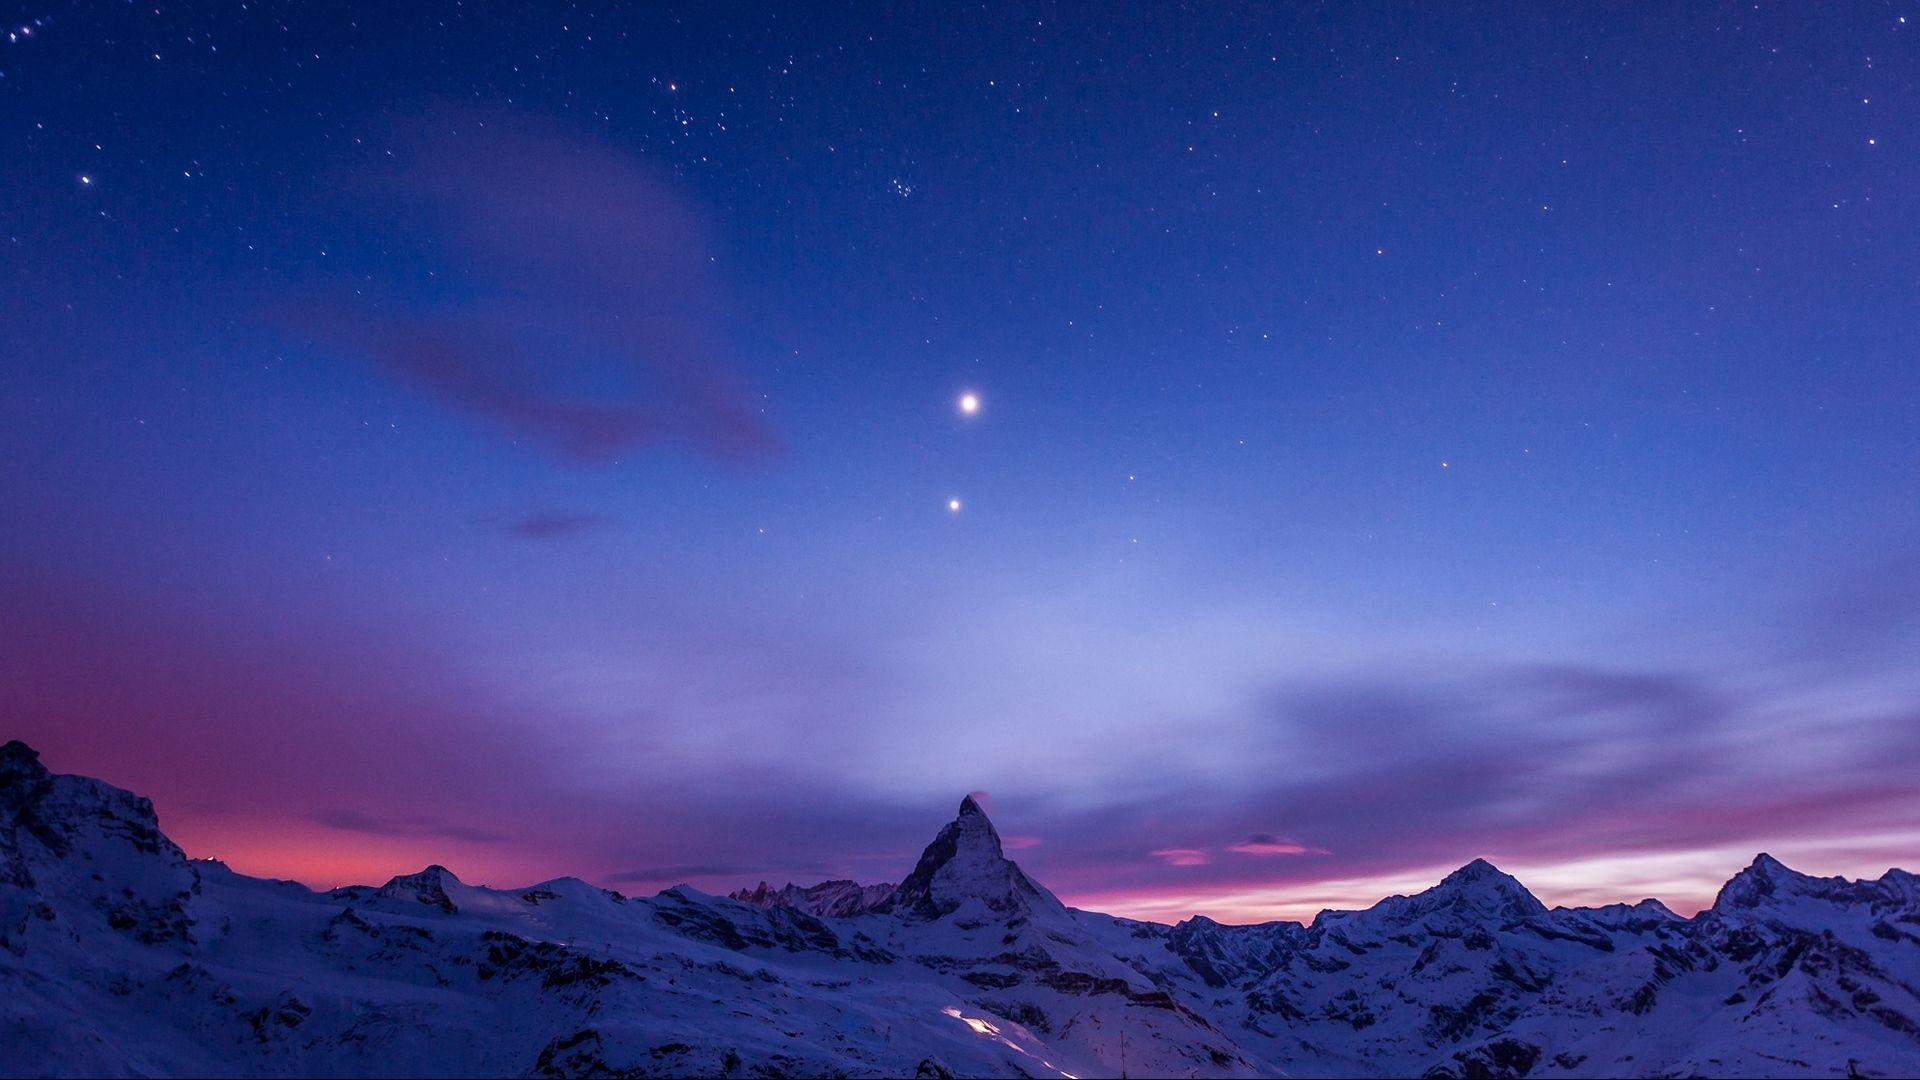 Download wallpaper 1920x1080 night, mountains, snow, sky, stars full